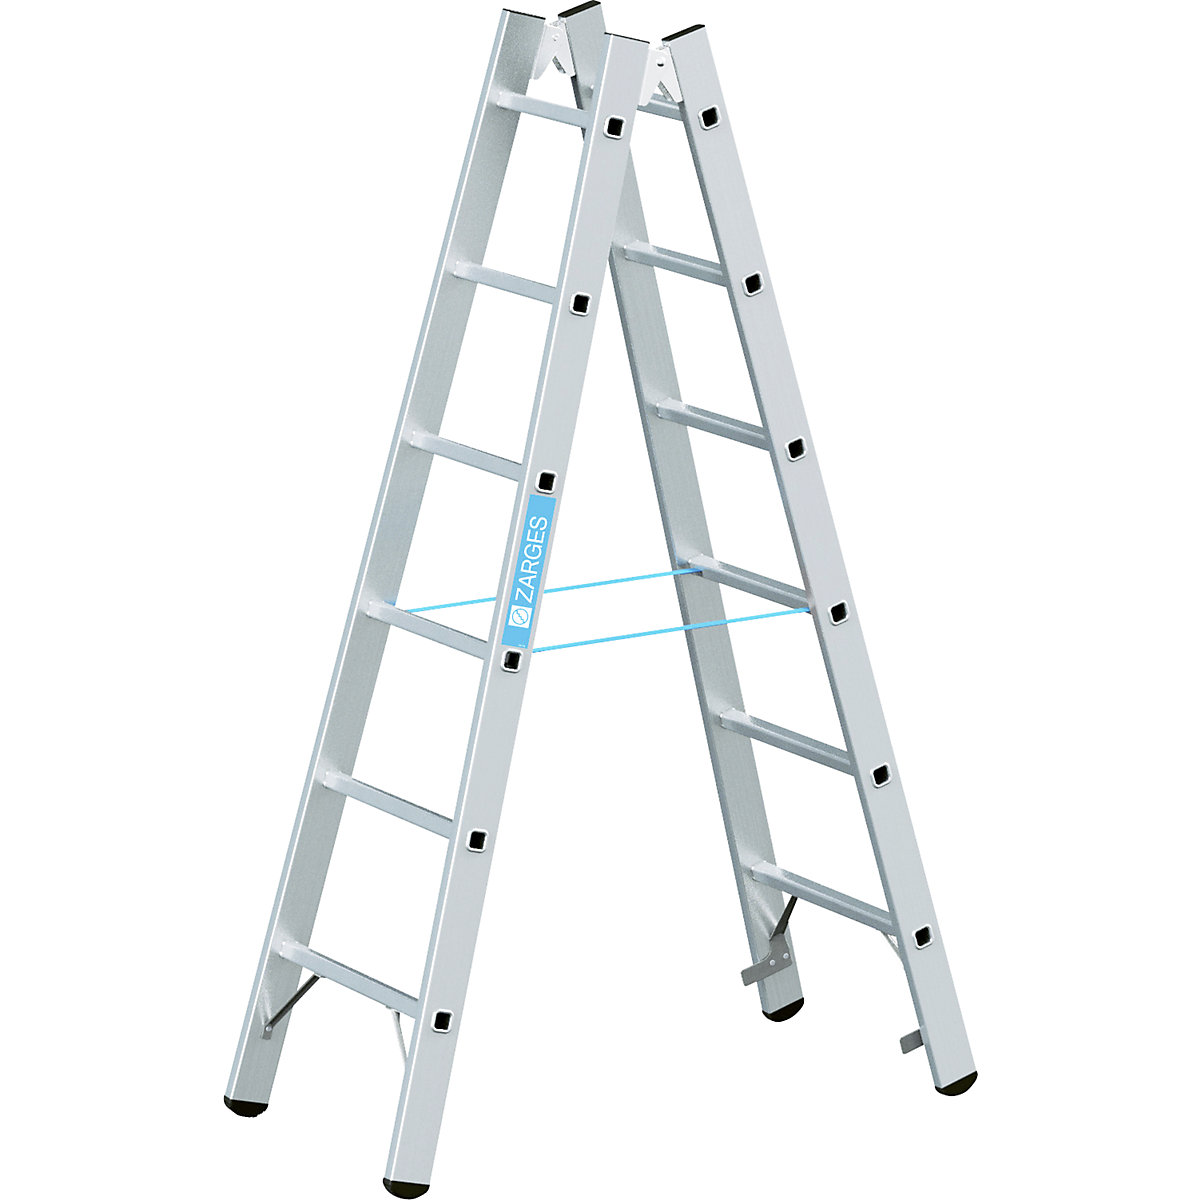 Professional rung ladder – ZARGES